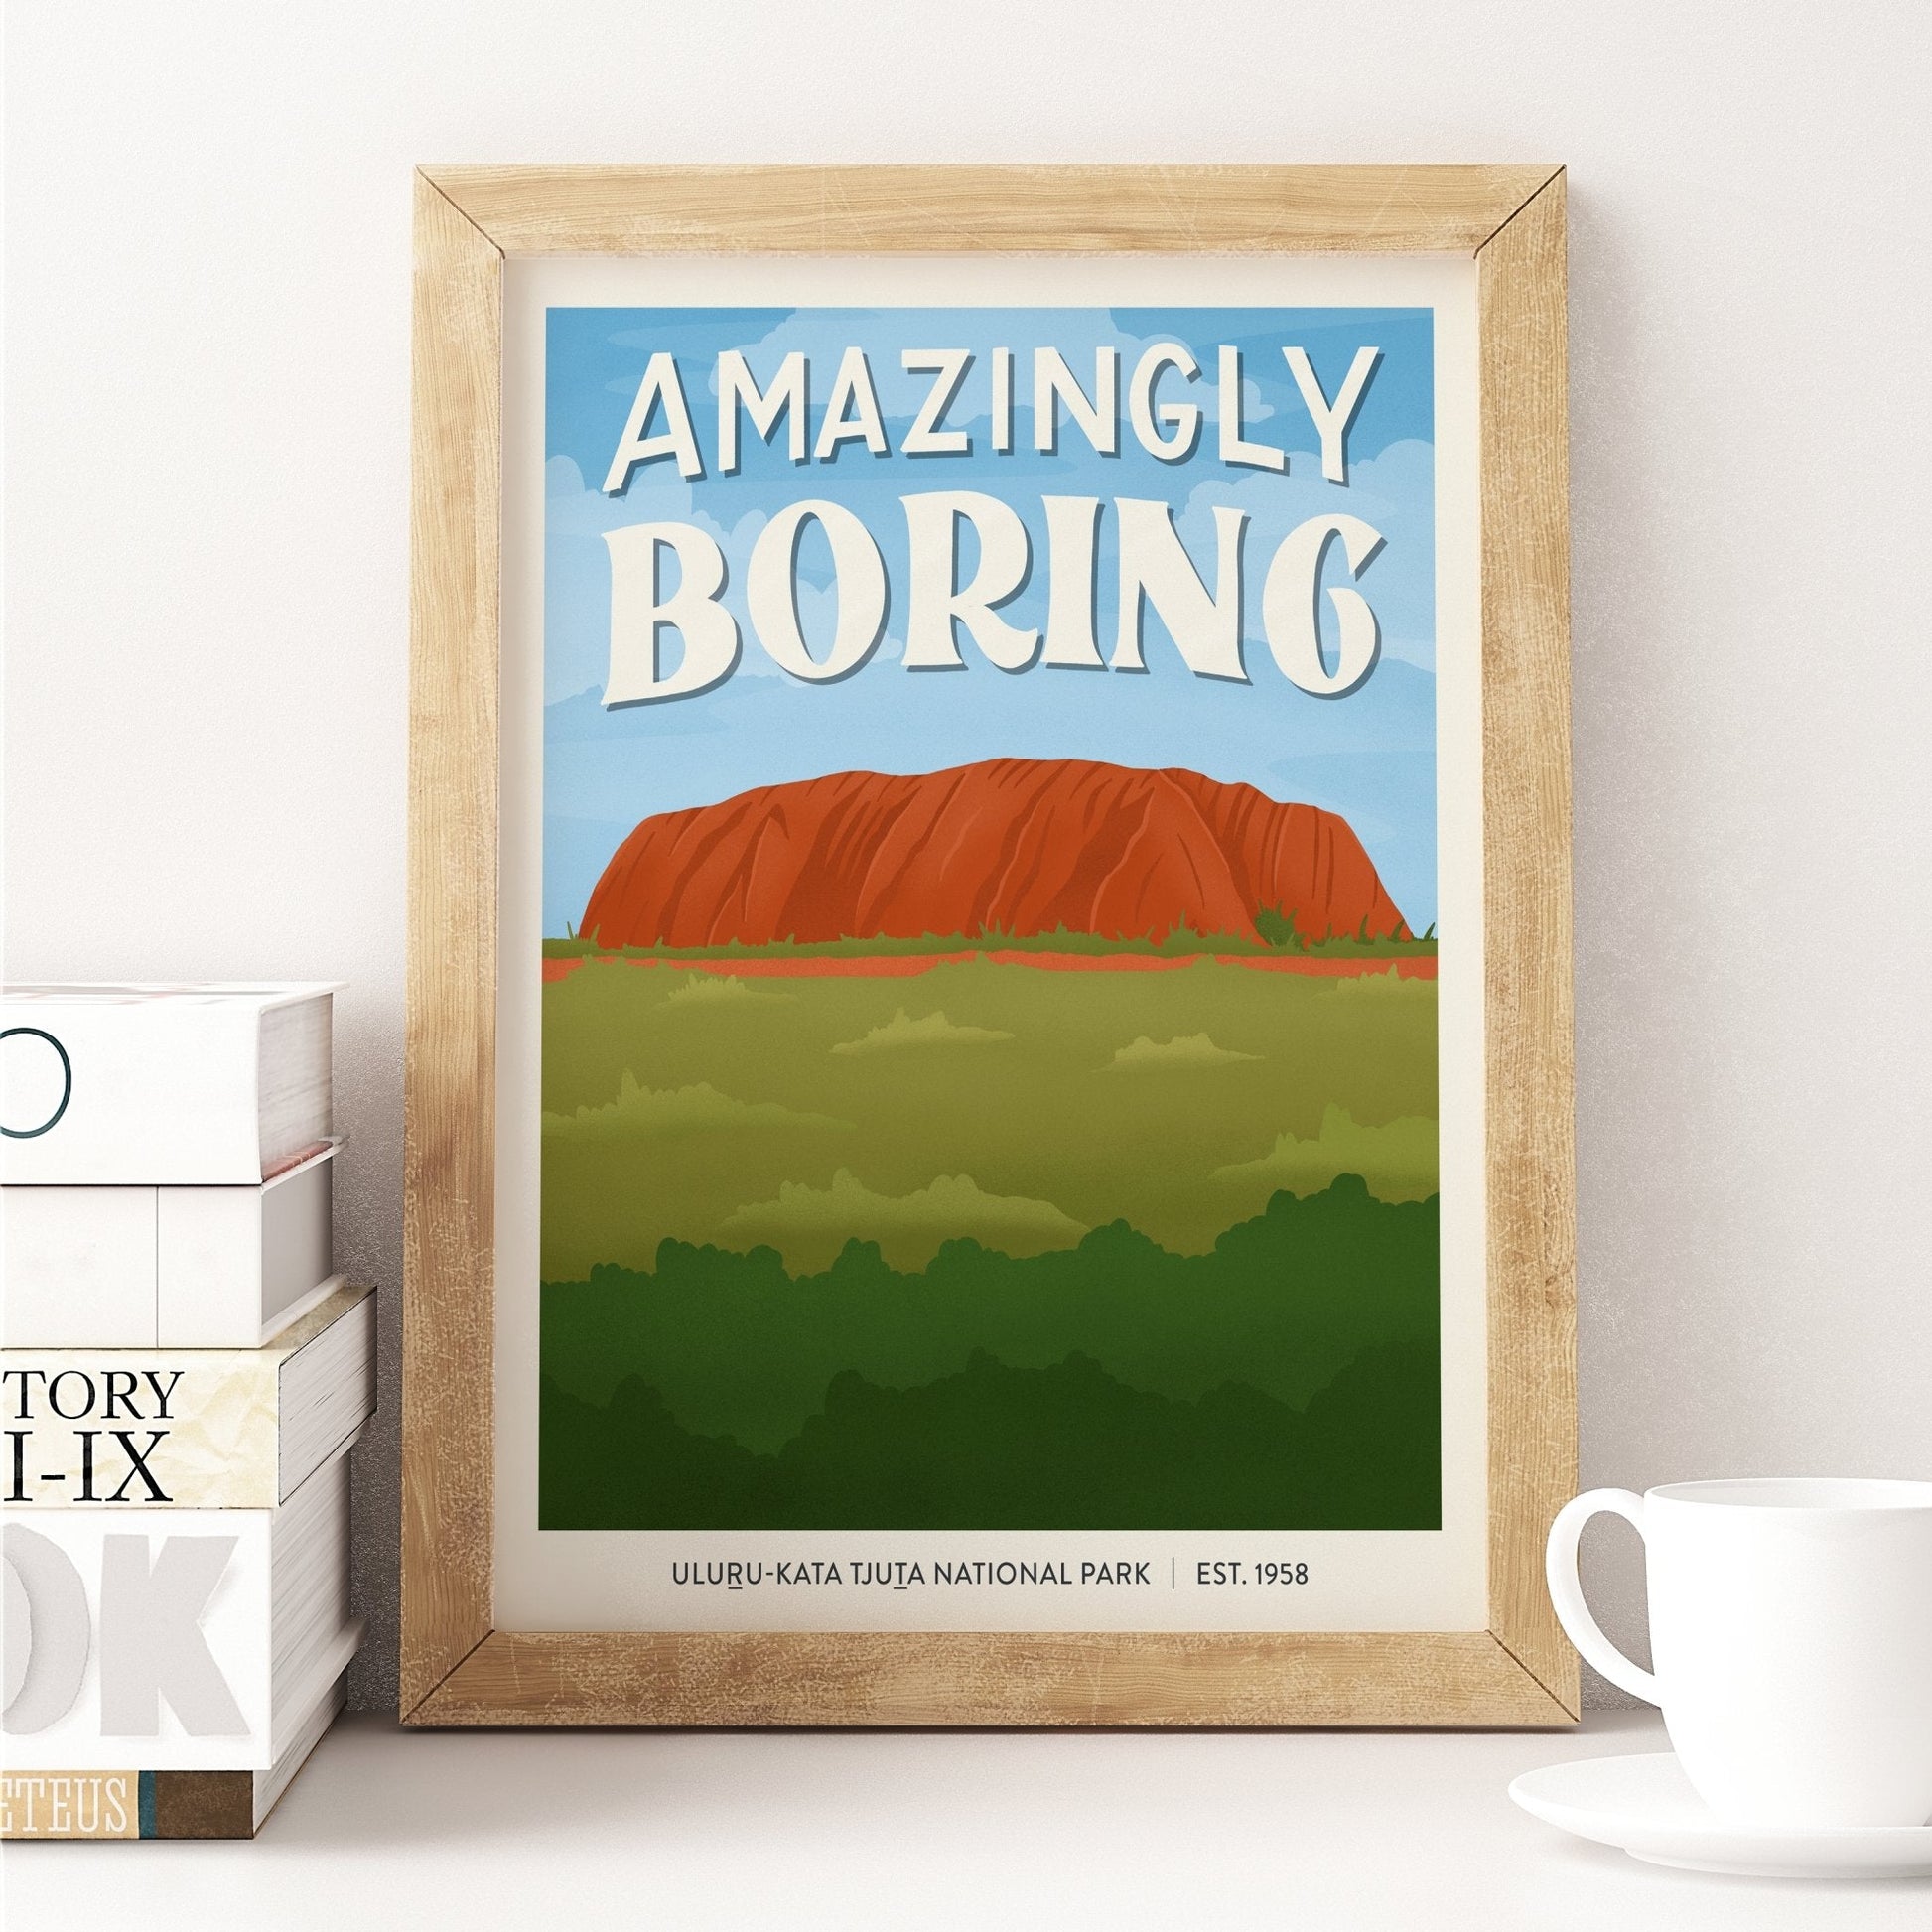 Subpar Parks International Parks - 8x10 Print - Amber Share Design-Uluru-Kata Tjuta National Park (Australia)--